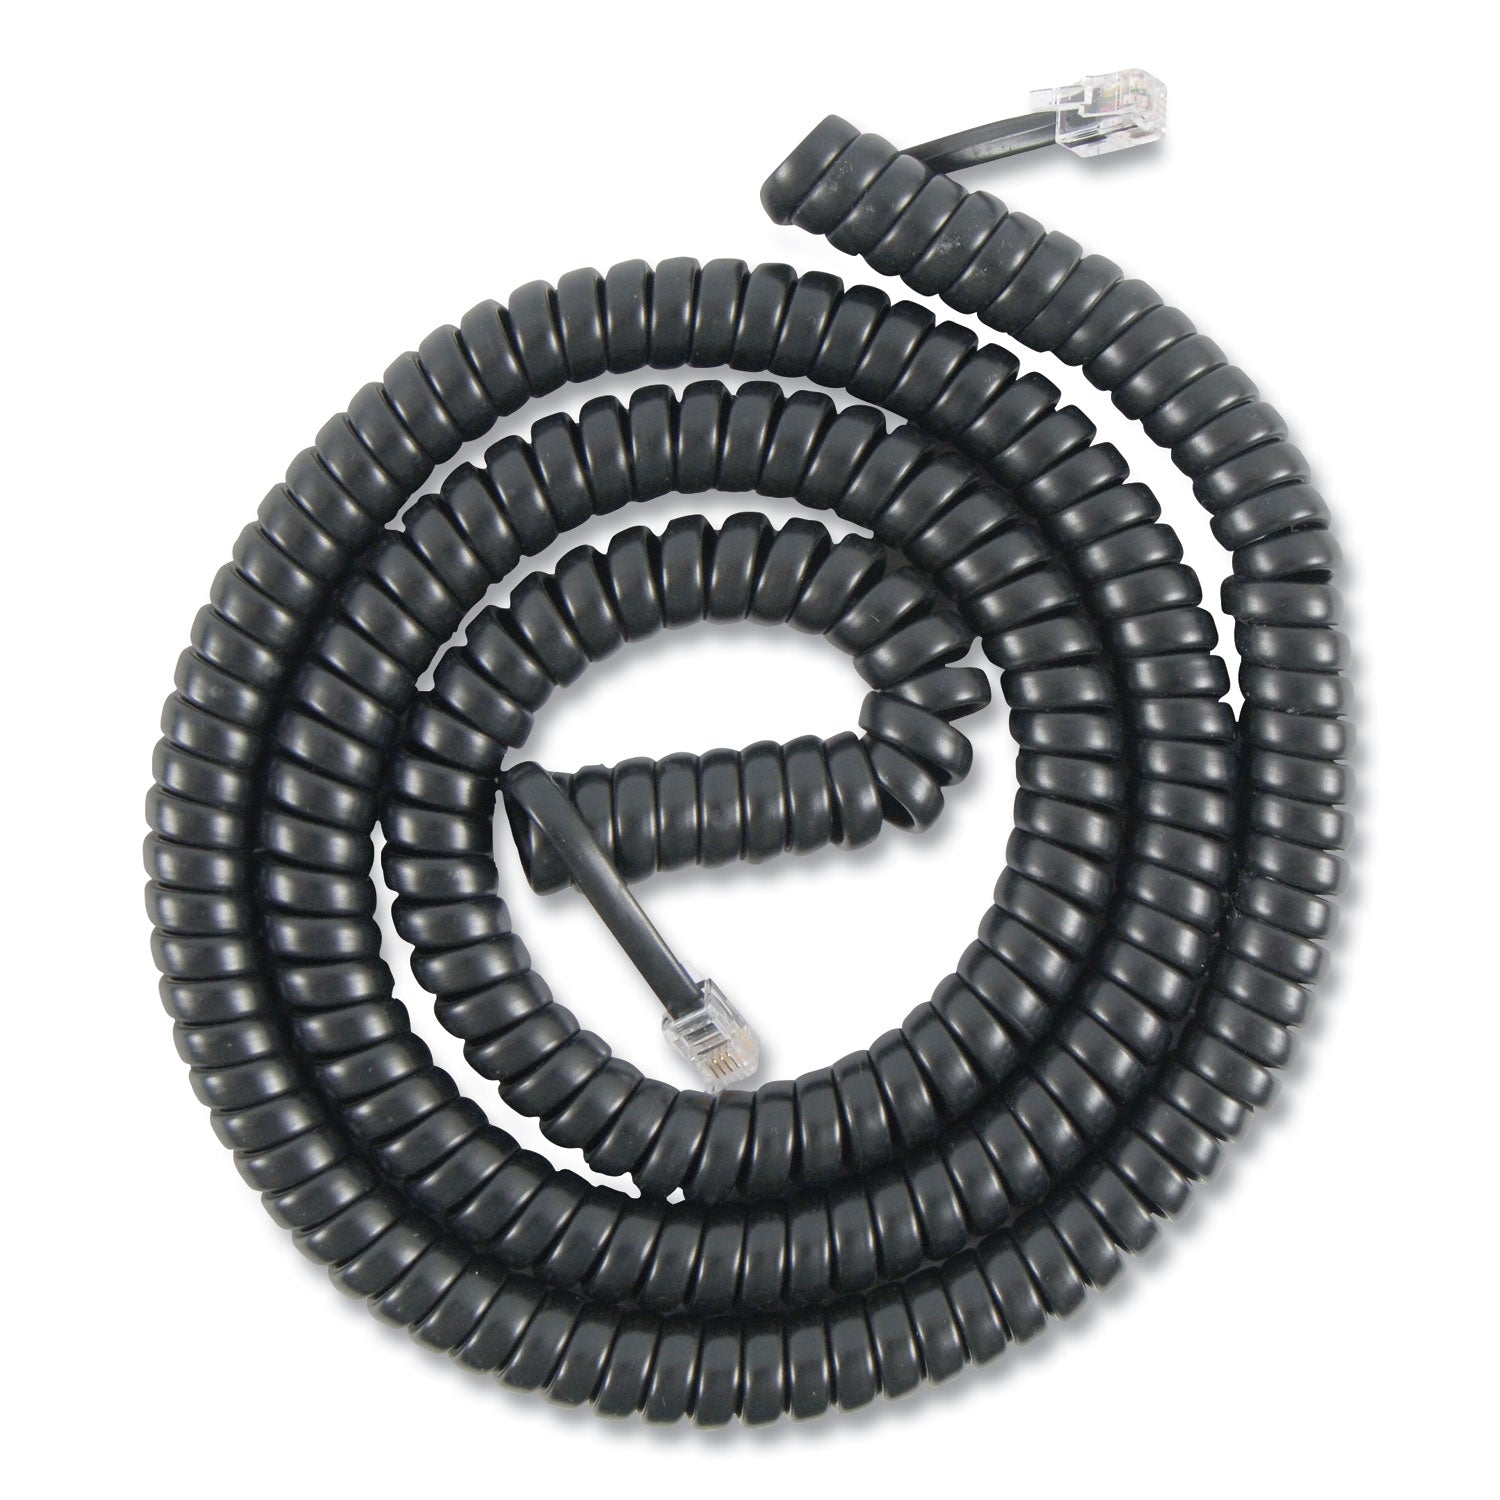 coiled-phone-cord-plug-plug-12-ft-black_pwg2763986177 - 1